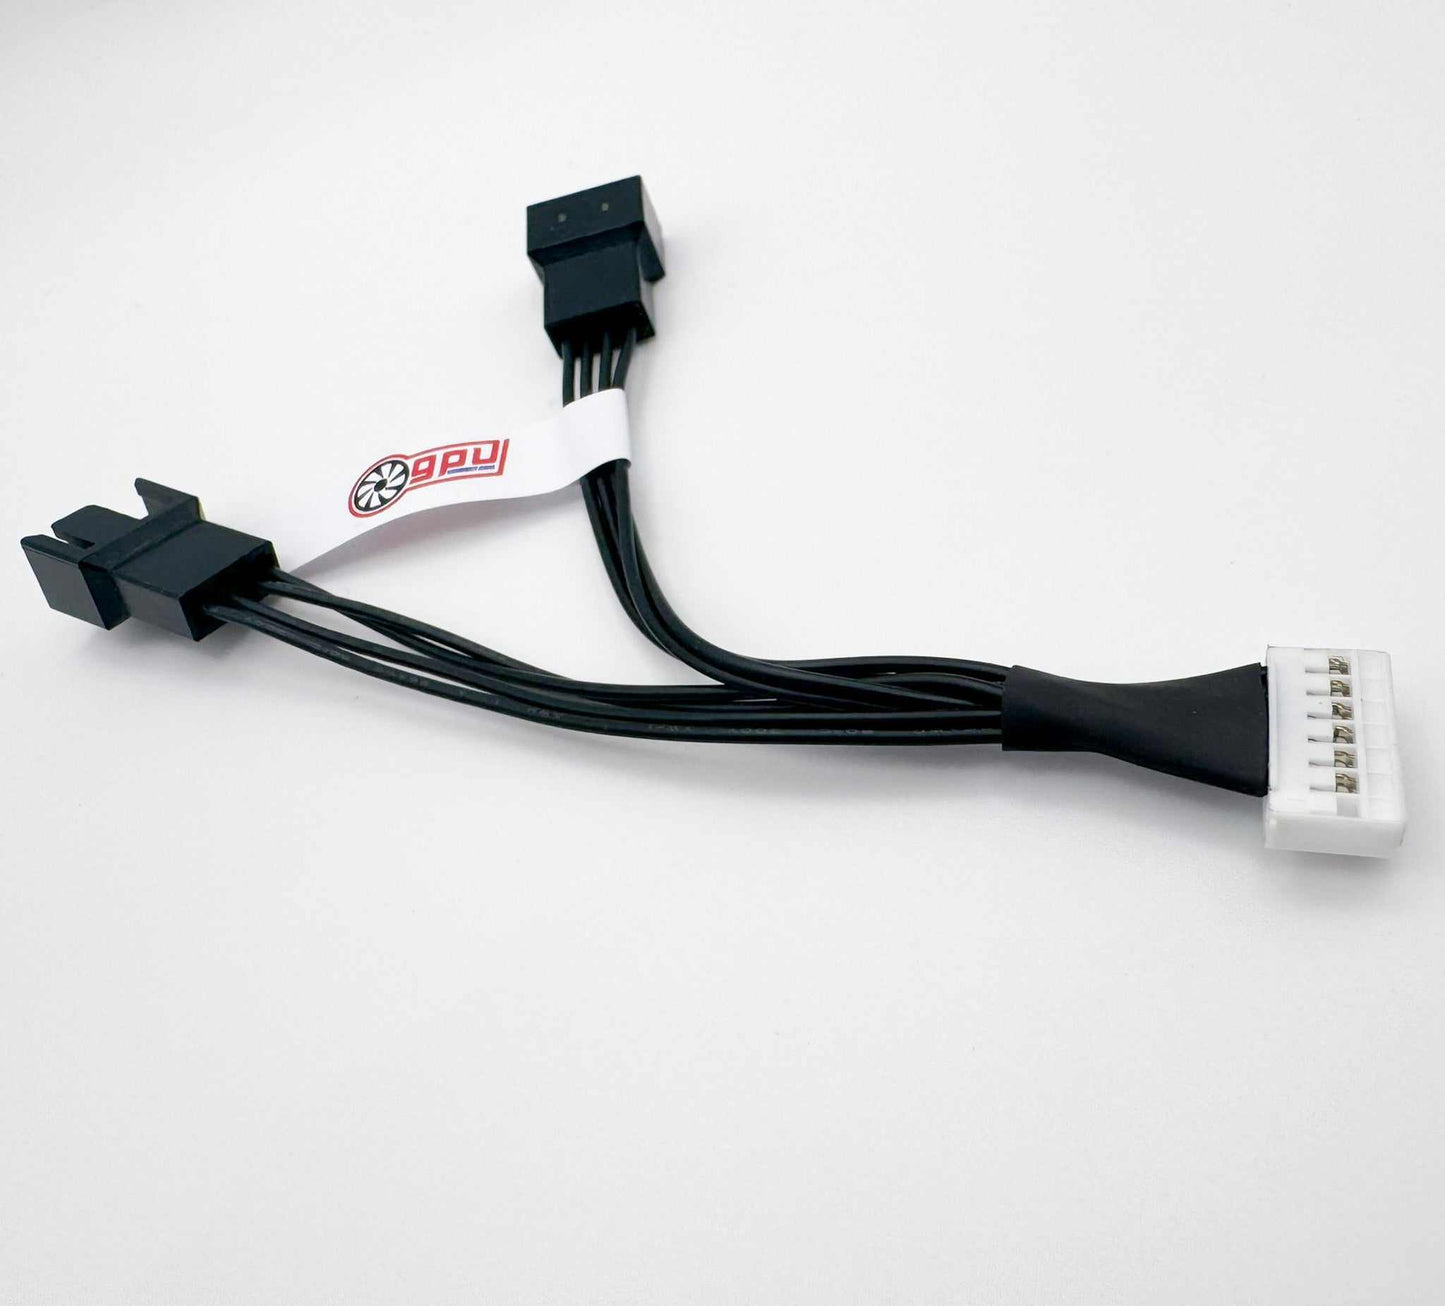 ASUS STRIX RTX 2060 2070 7-Pin PWM Adapter Deshroud Cable - GPUCONNECT.COM